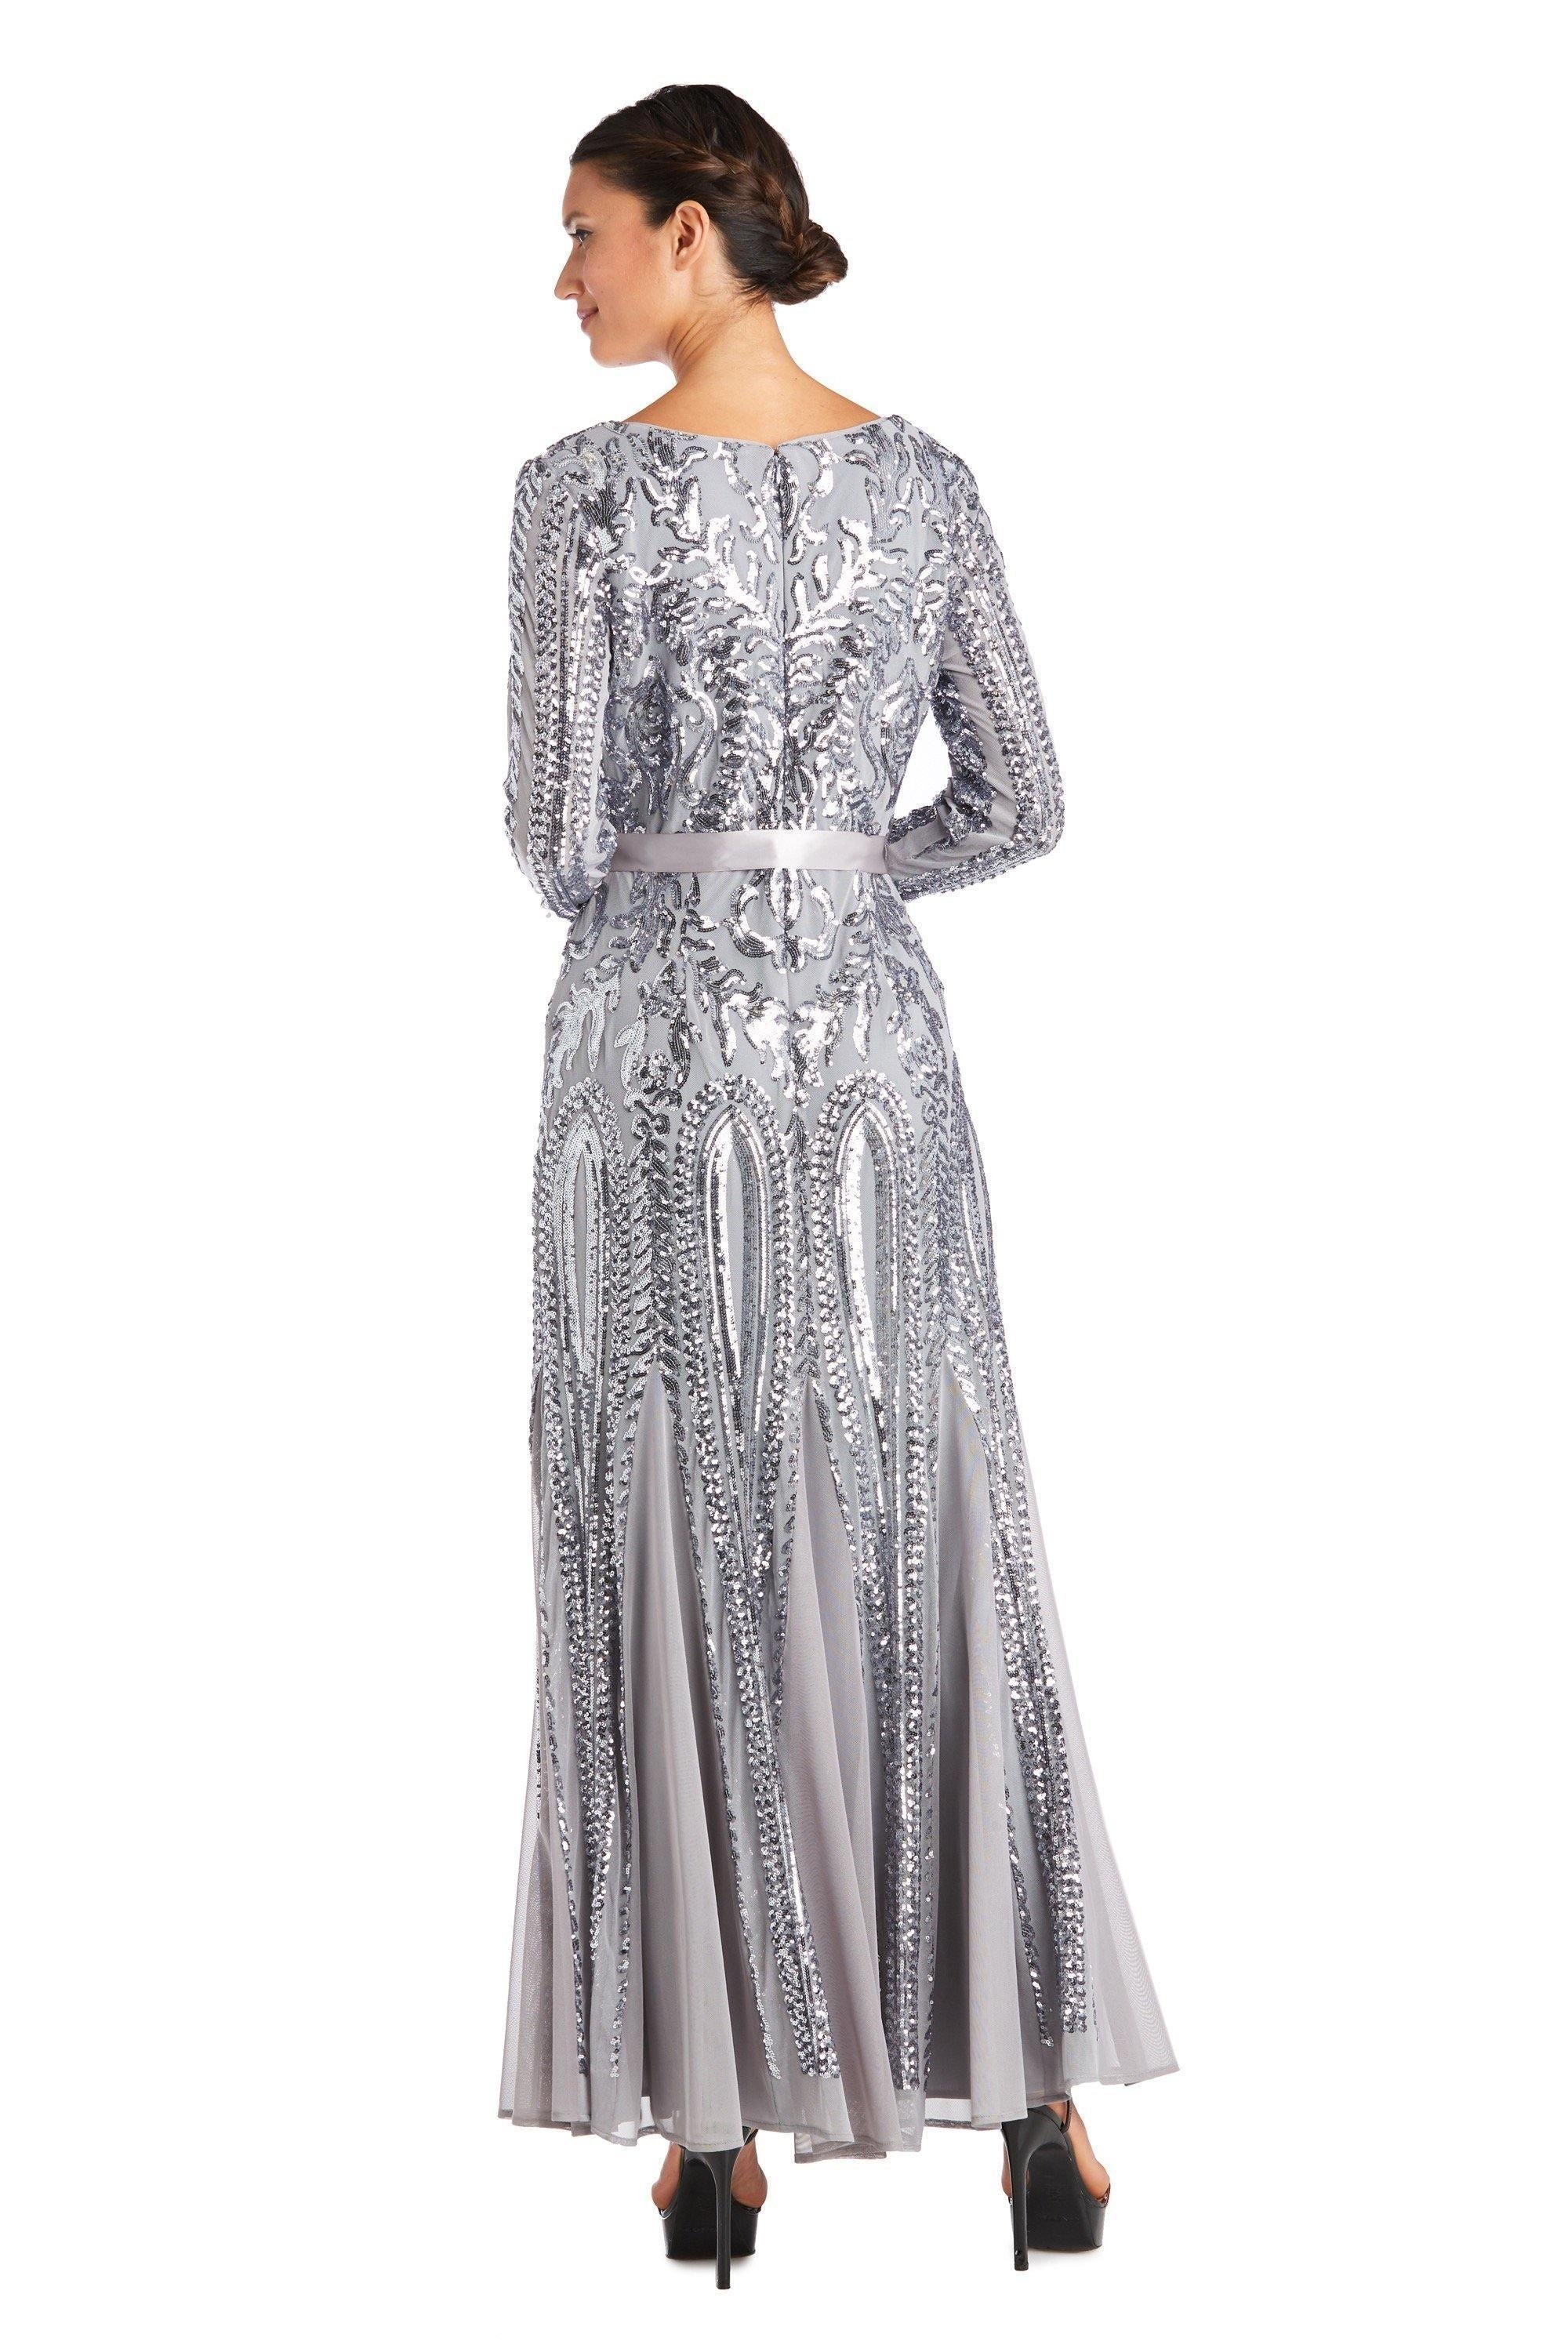 R&M Richards Long Sleeve Formal Petite Dress Sale - The Dress Outlet